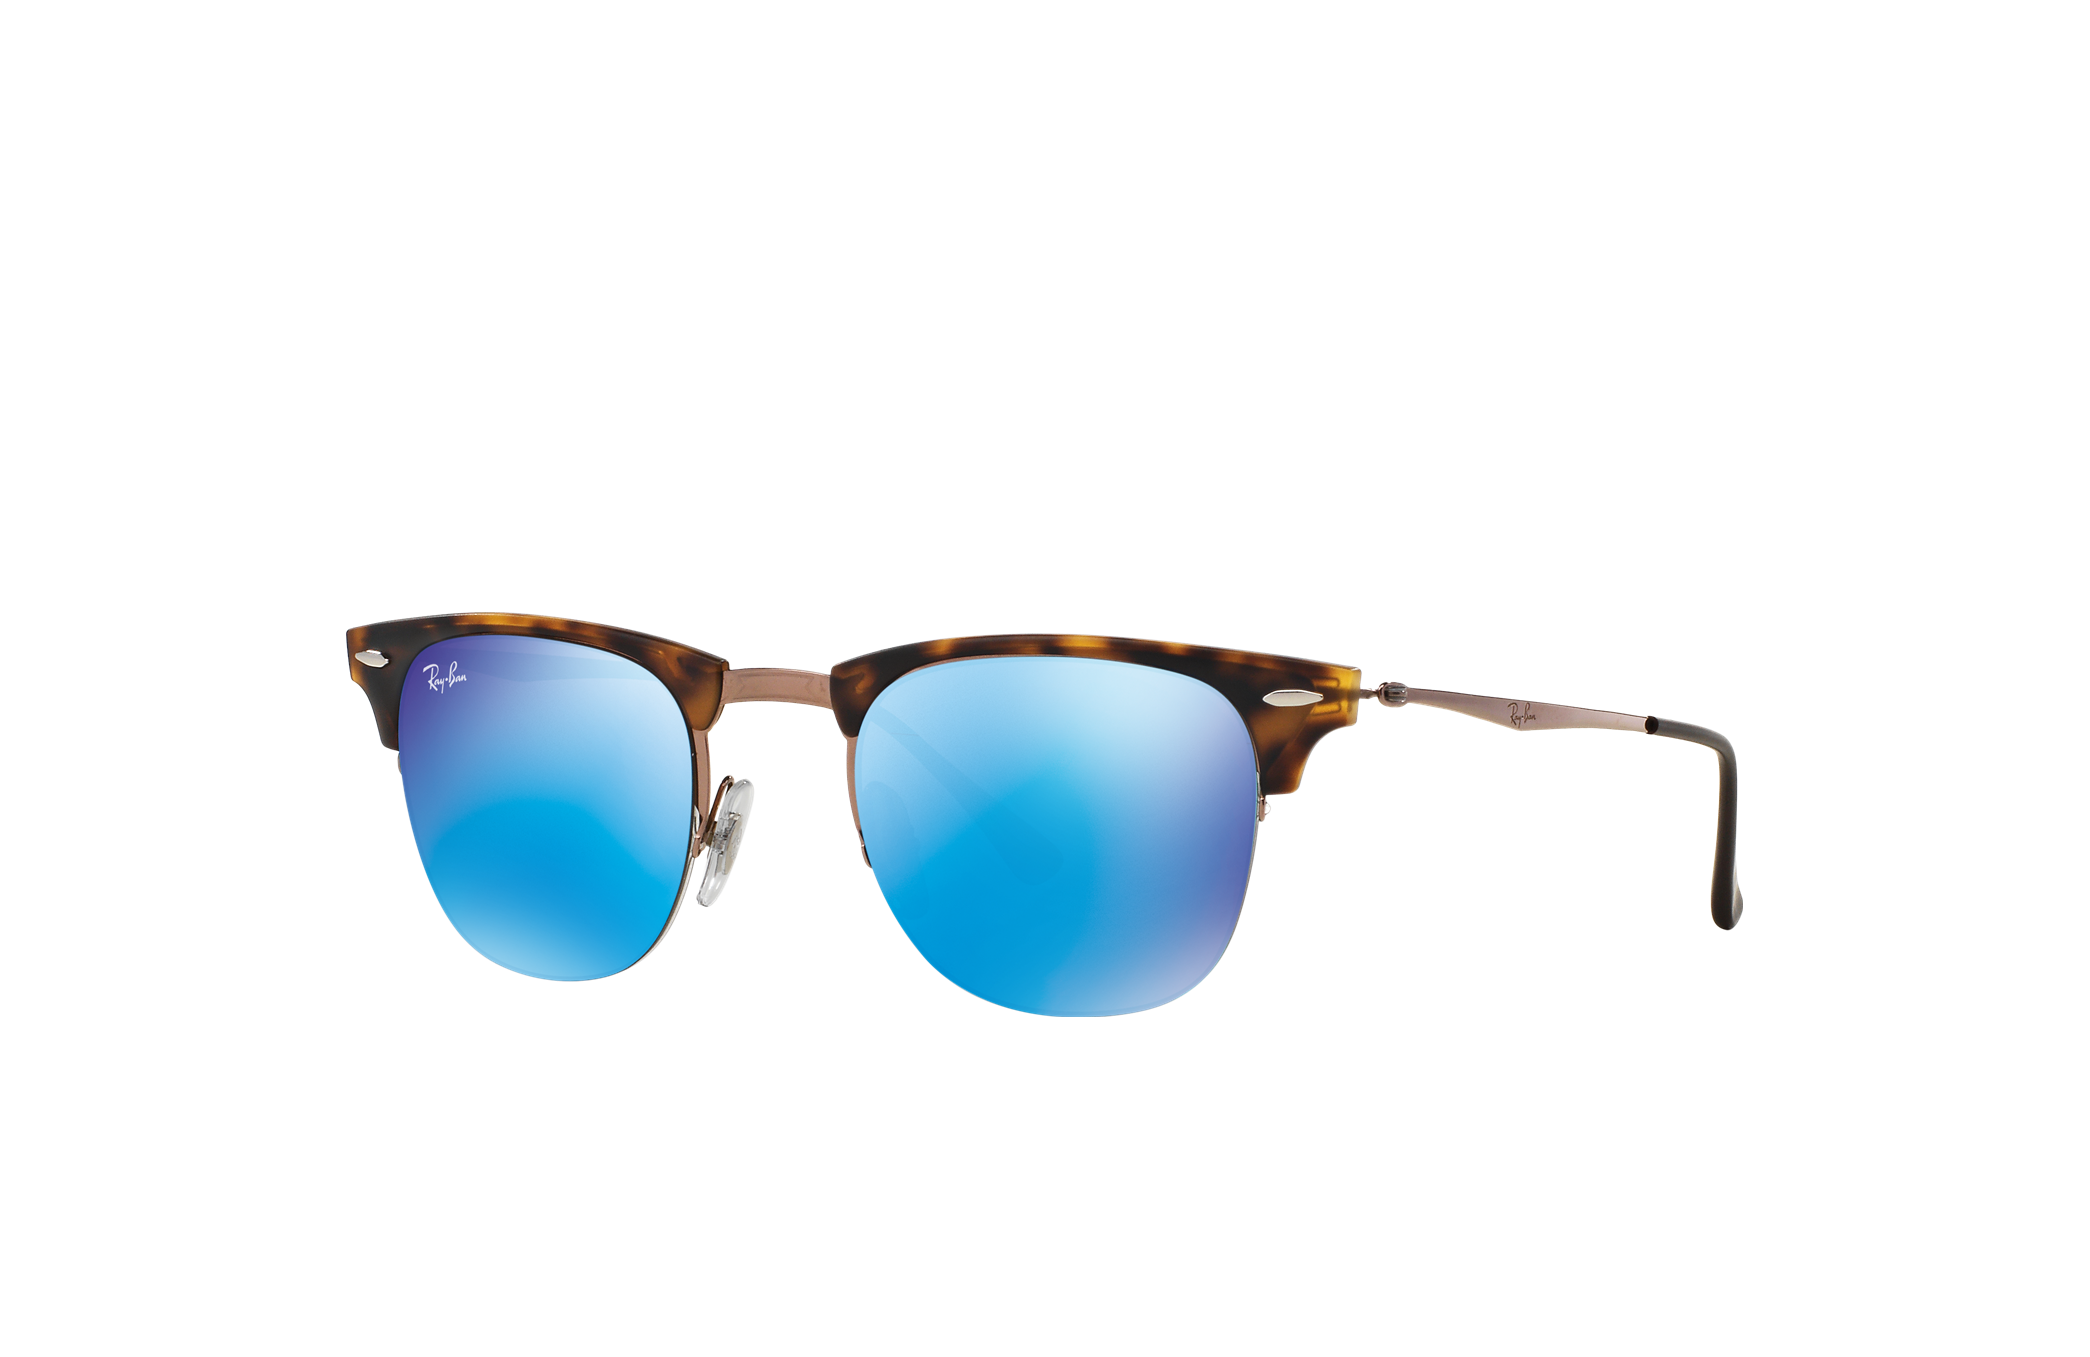 omvatten Reclame Versterken Clubmaster Light Ray Sunglasses in Tortoise and Blue | Ray-Ban®